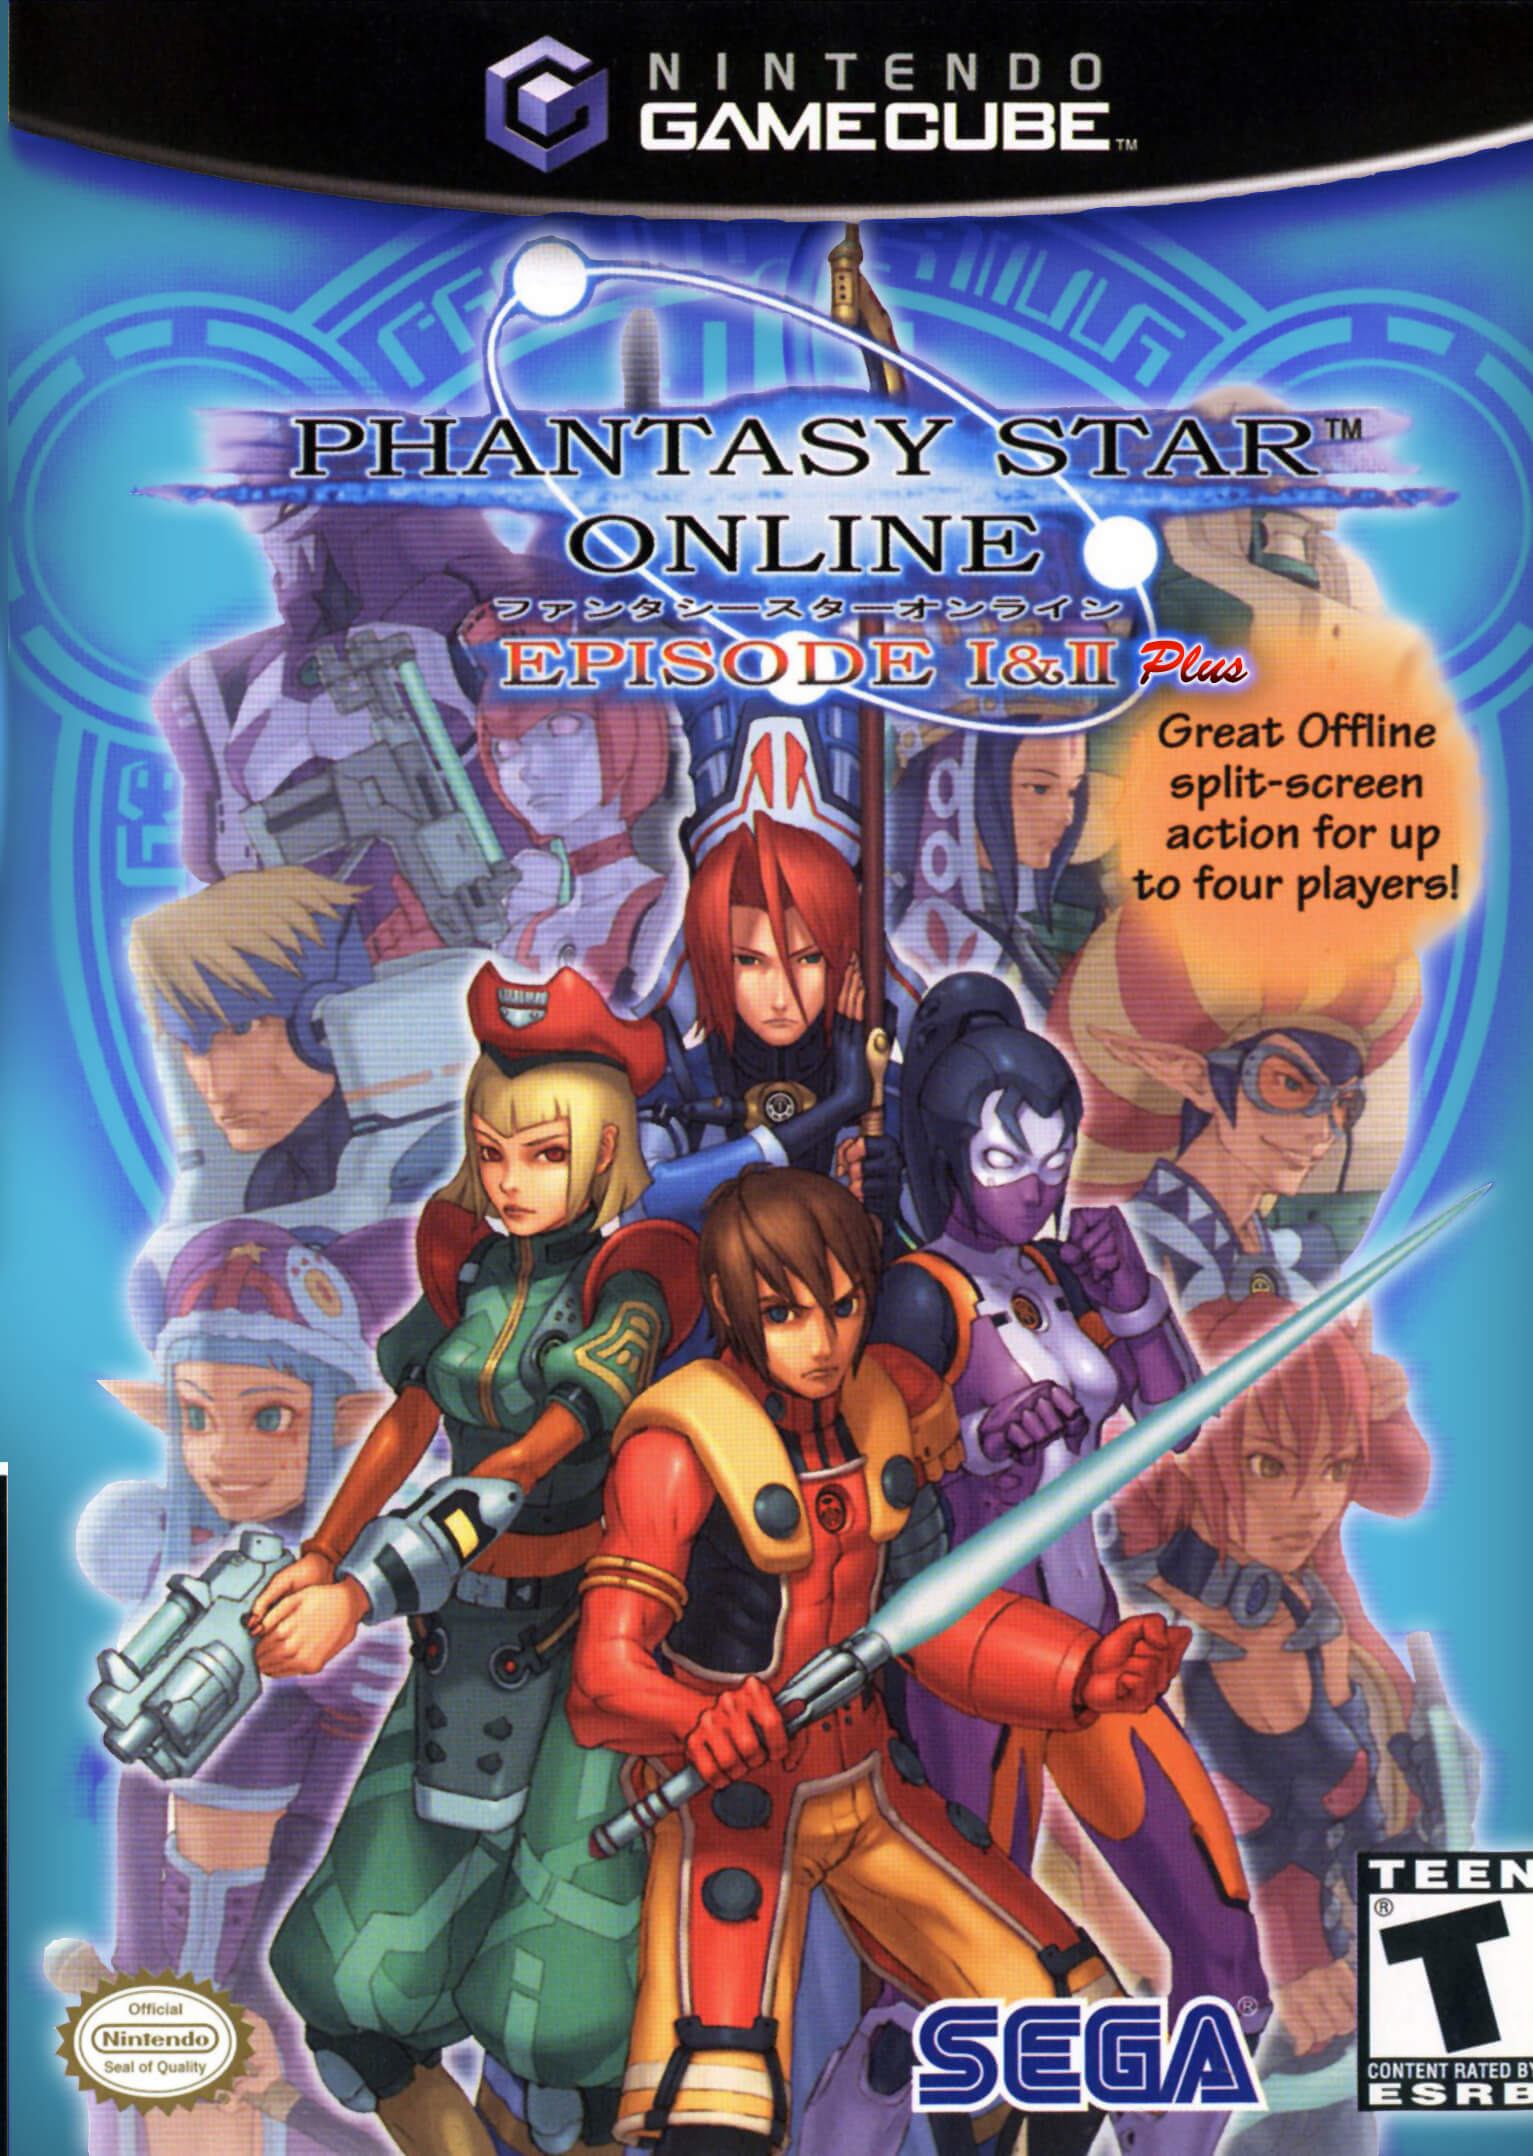 Phantasy Star Online: Episode I & II Plus